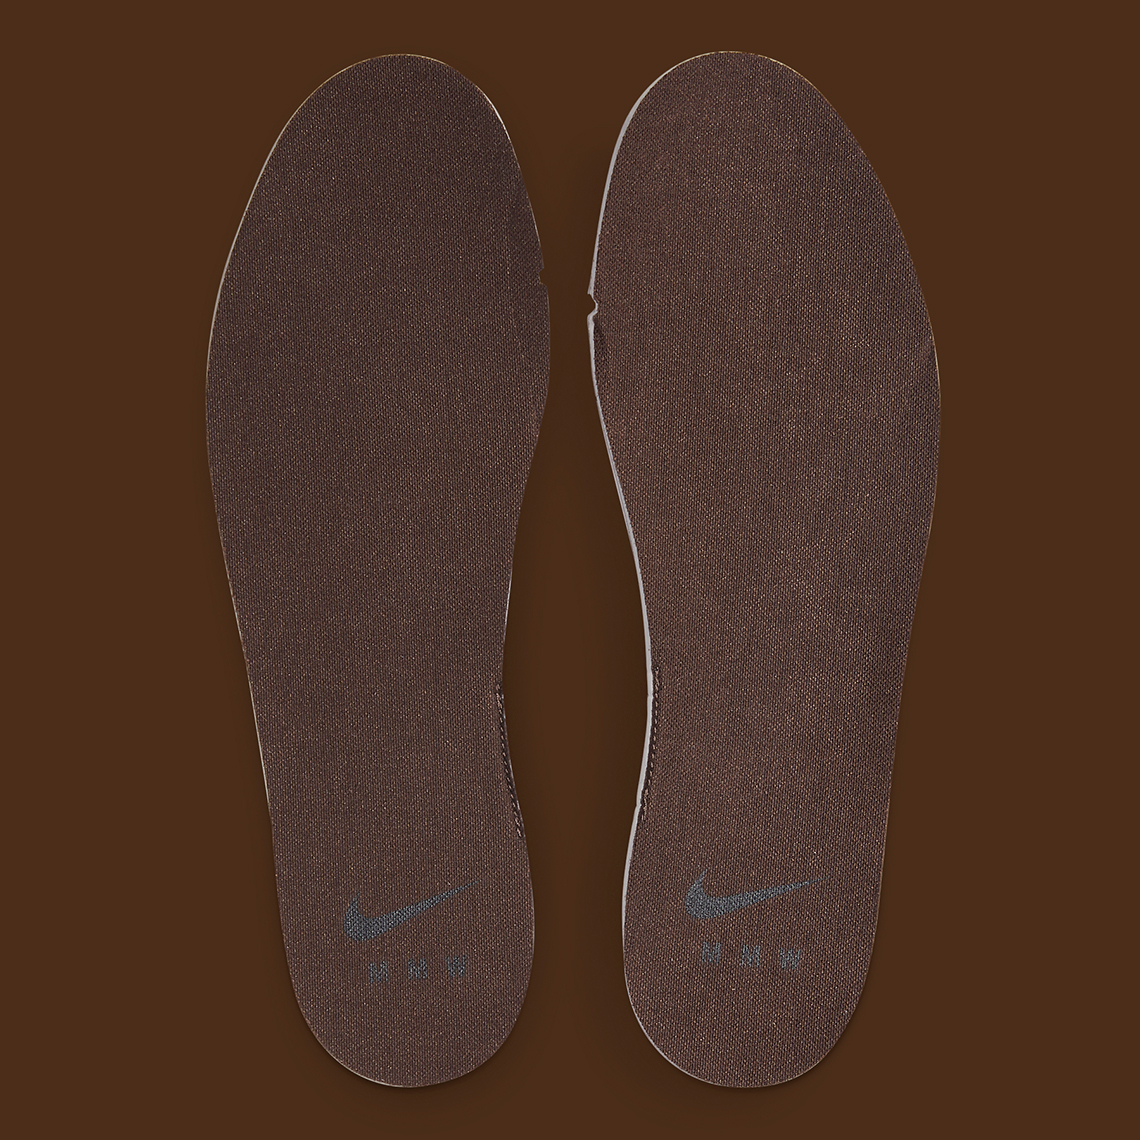 Nike Zoom Mmw 004 Black Brown Cu0676 201 Release Date 9